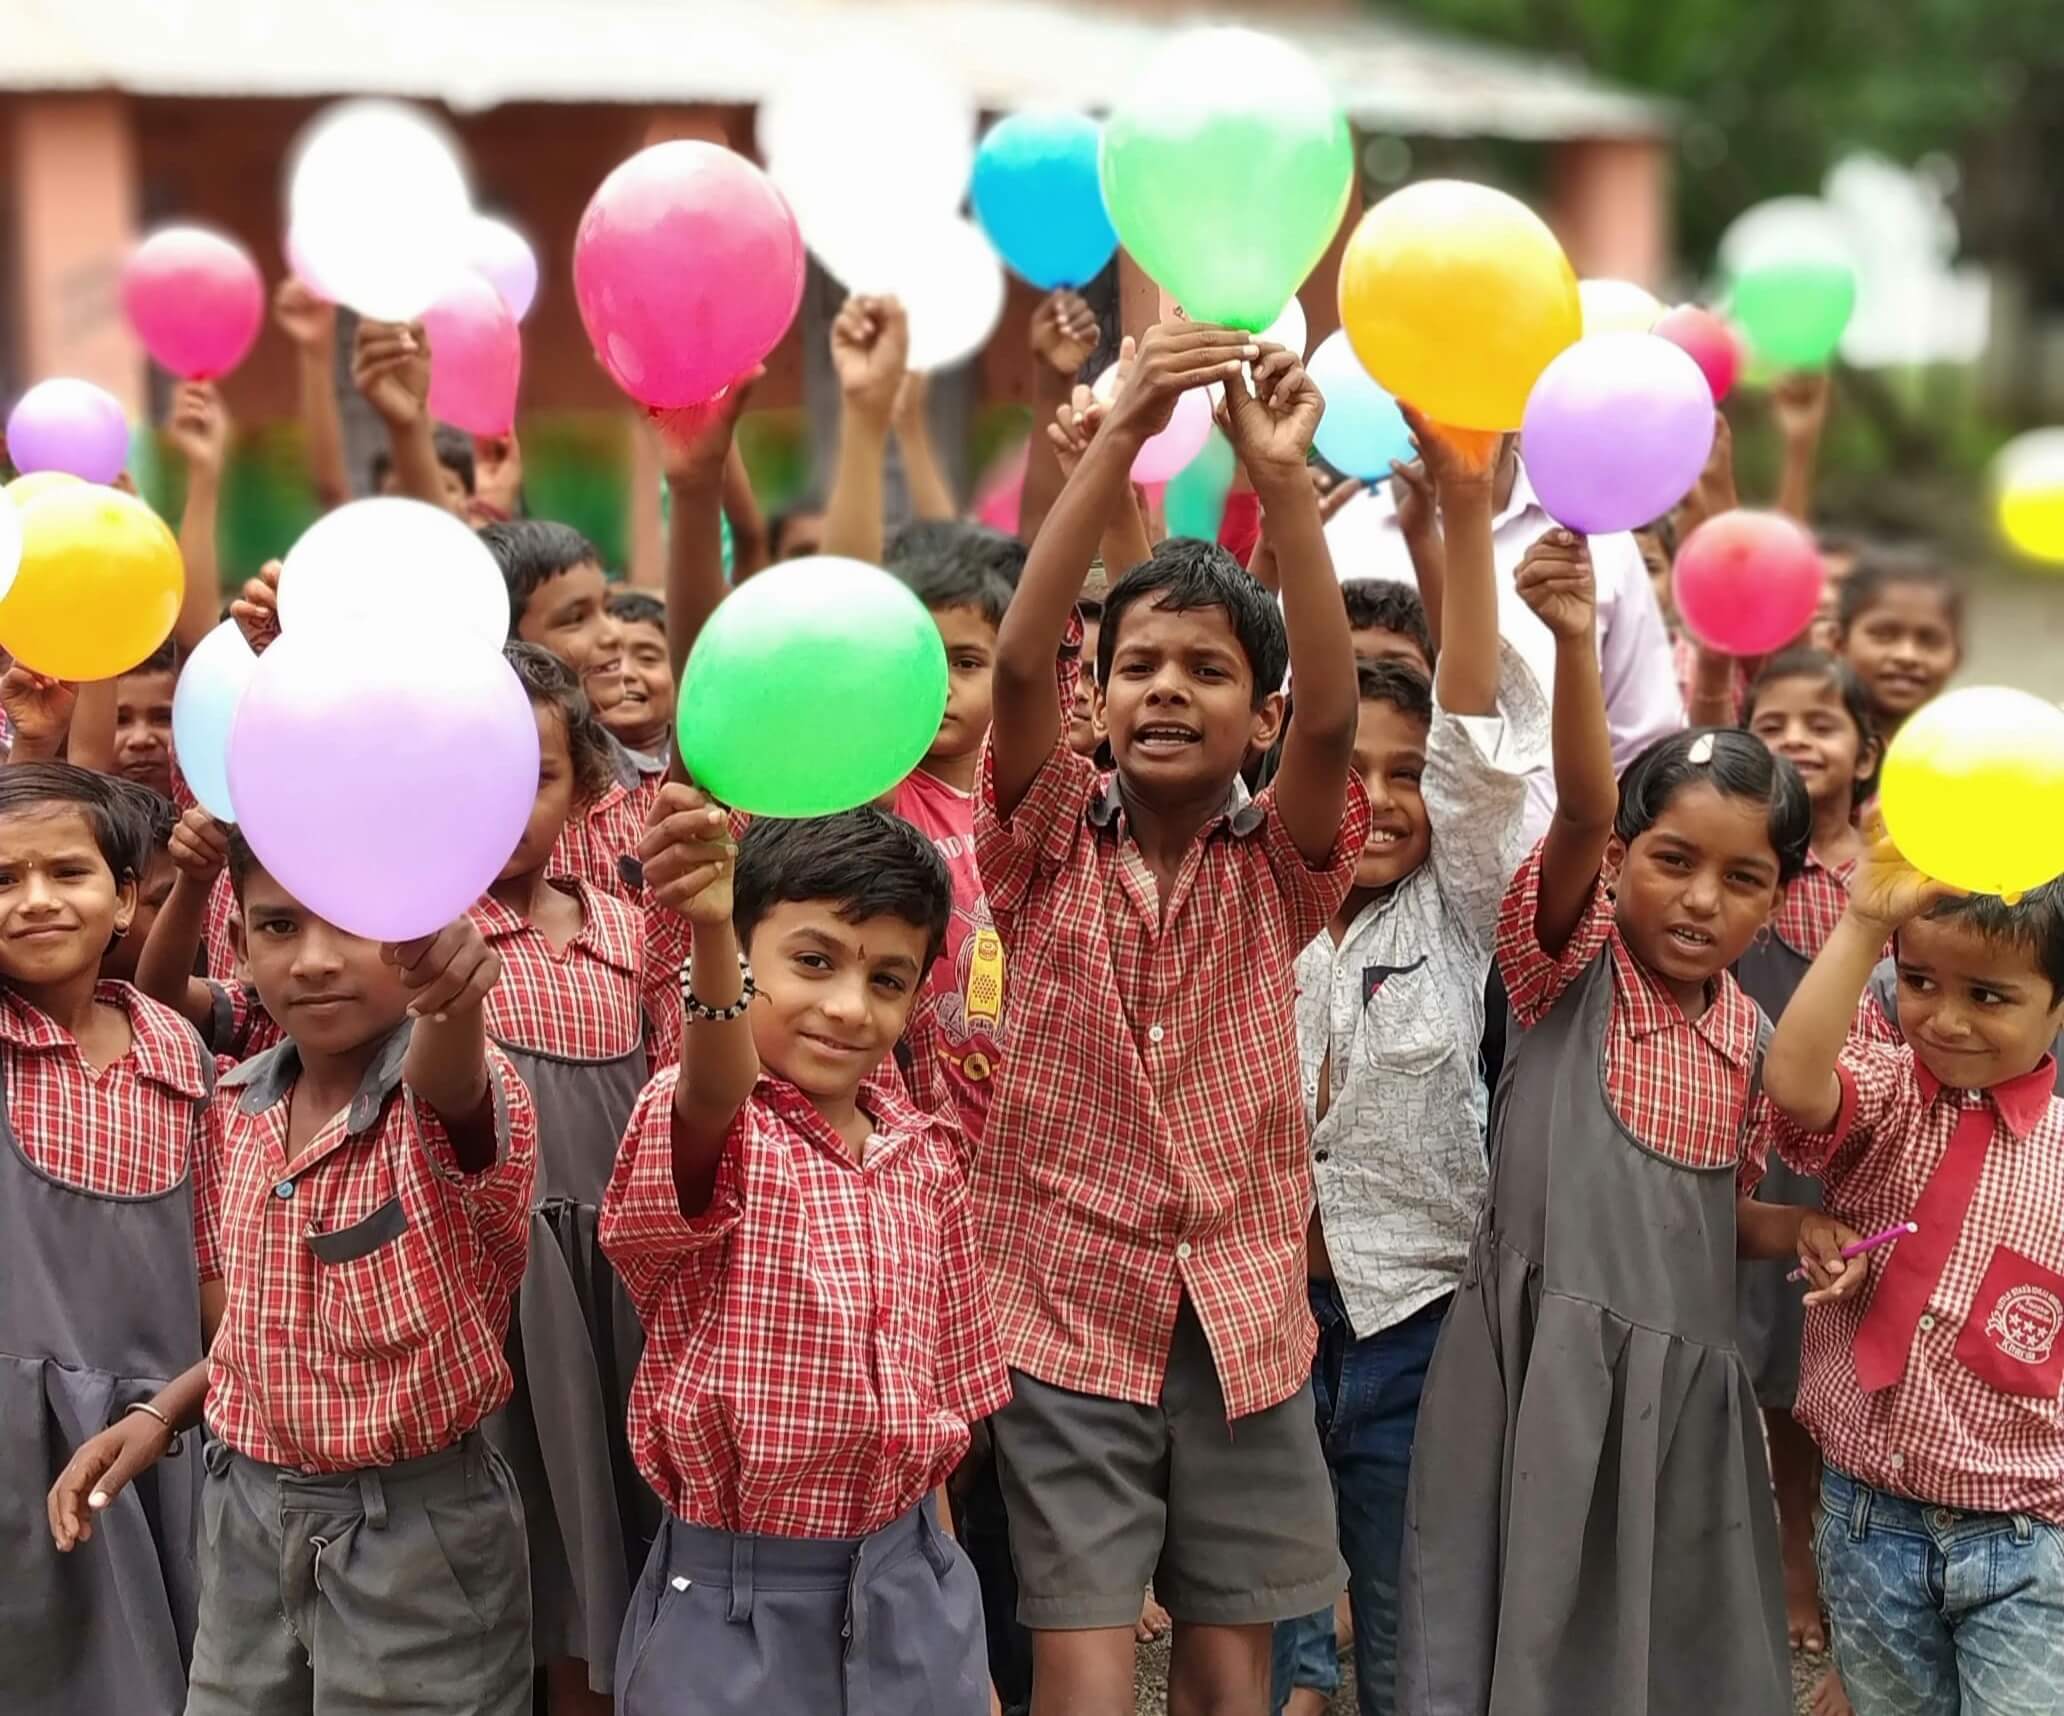 Dentist for kids in Kothrud - Smiling and happy kids